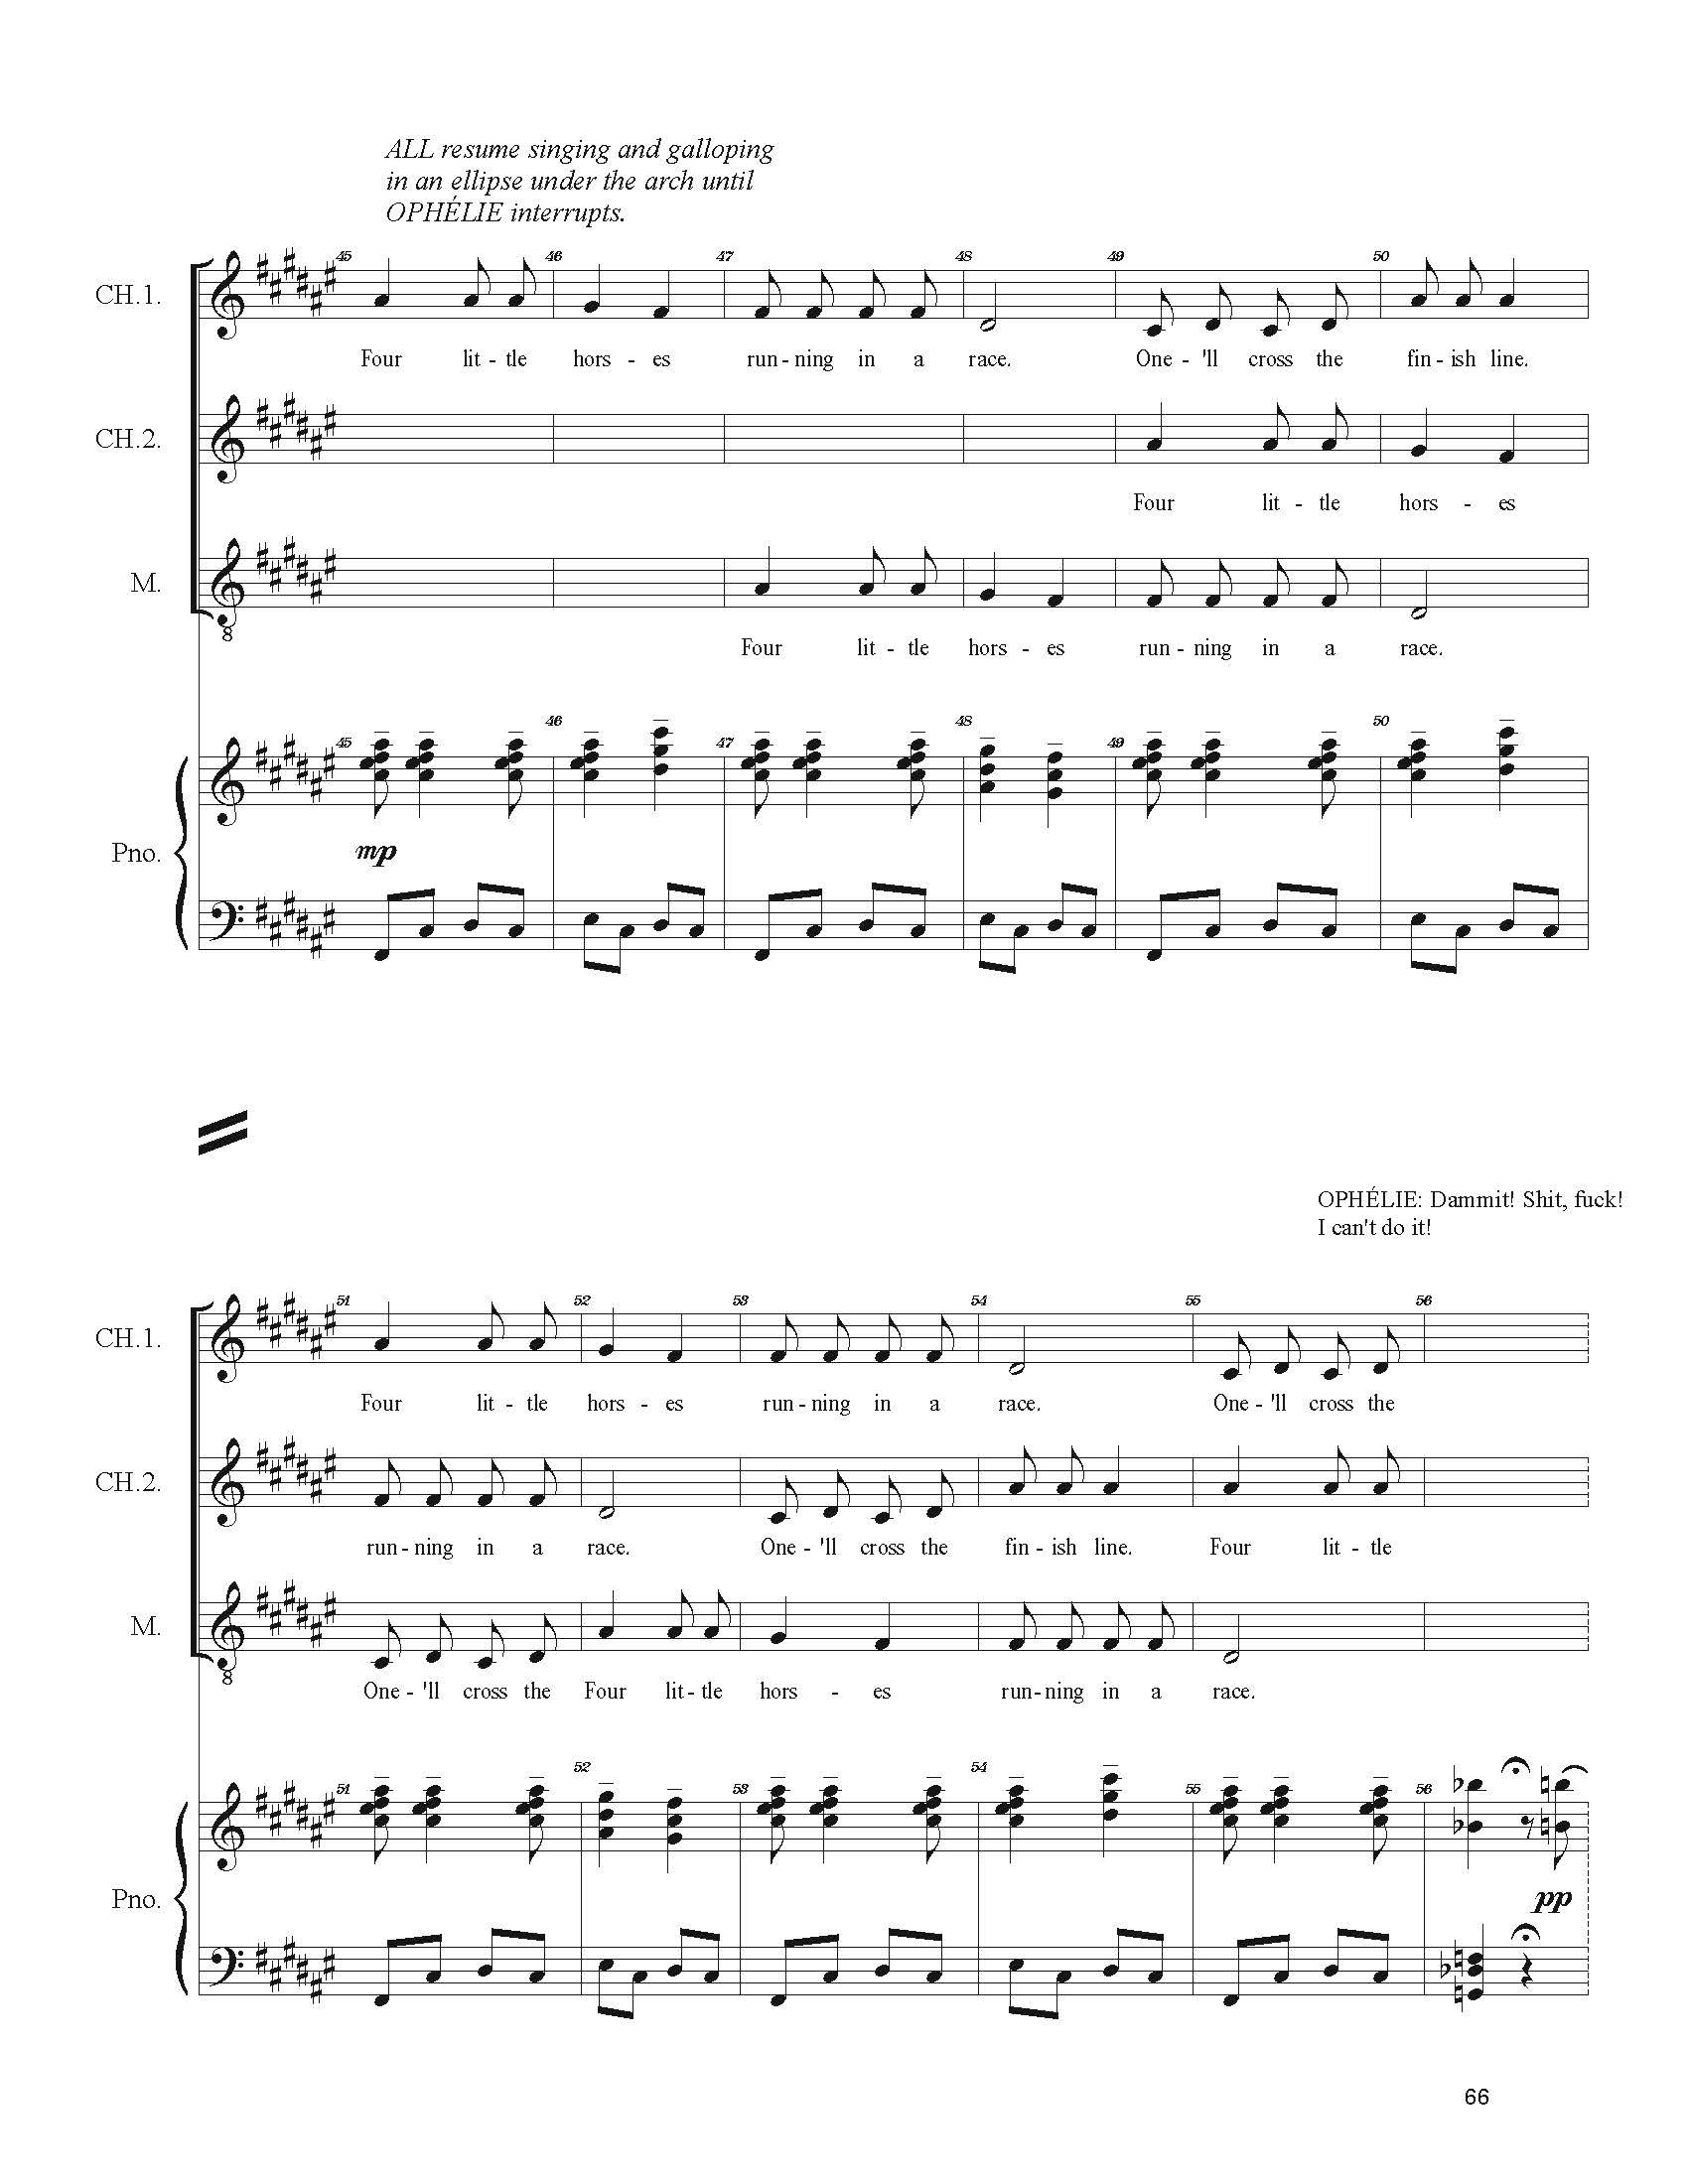 FULL PIANO VOCAL SCORE DRAFT 1 - Score_Page_066.jpg